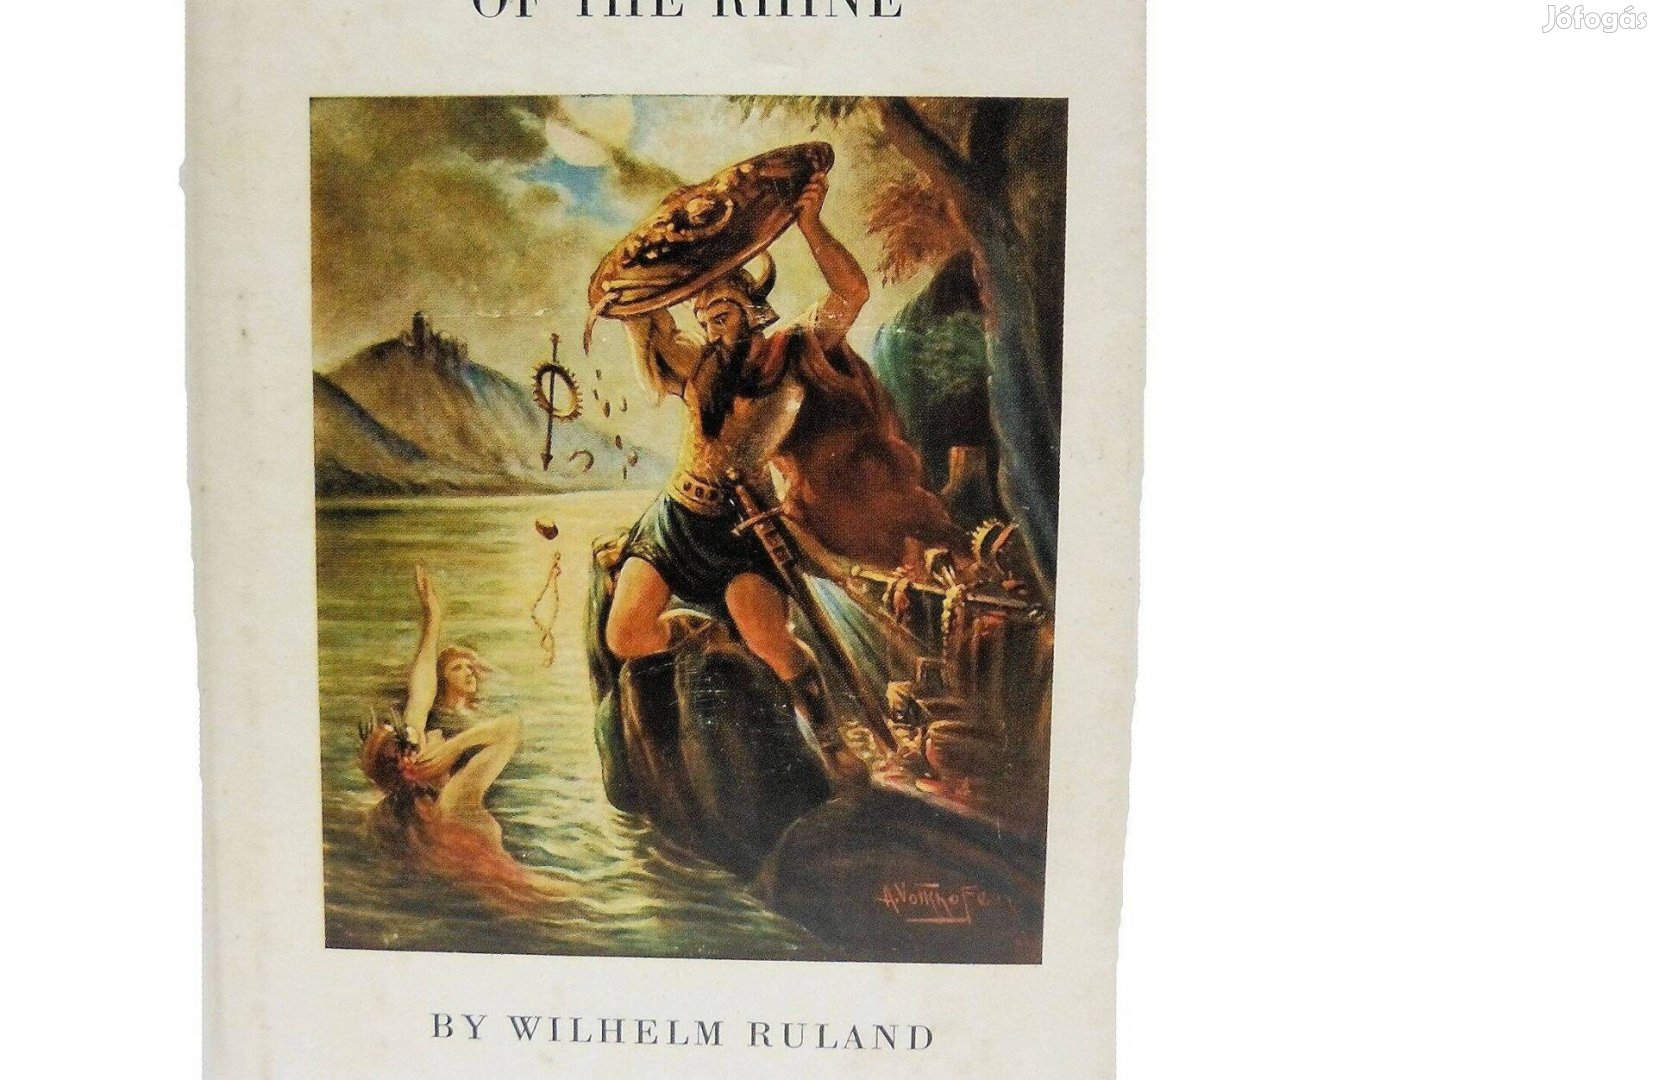 The finest legend of Rhine, könyv angolul tanulóknak